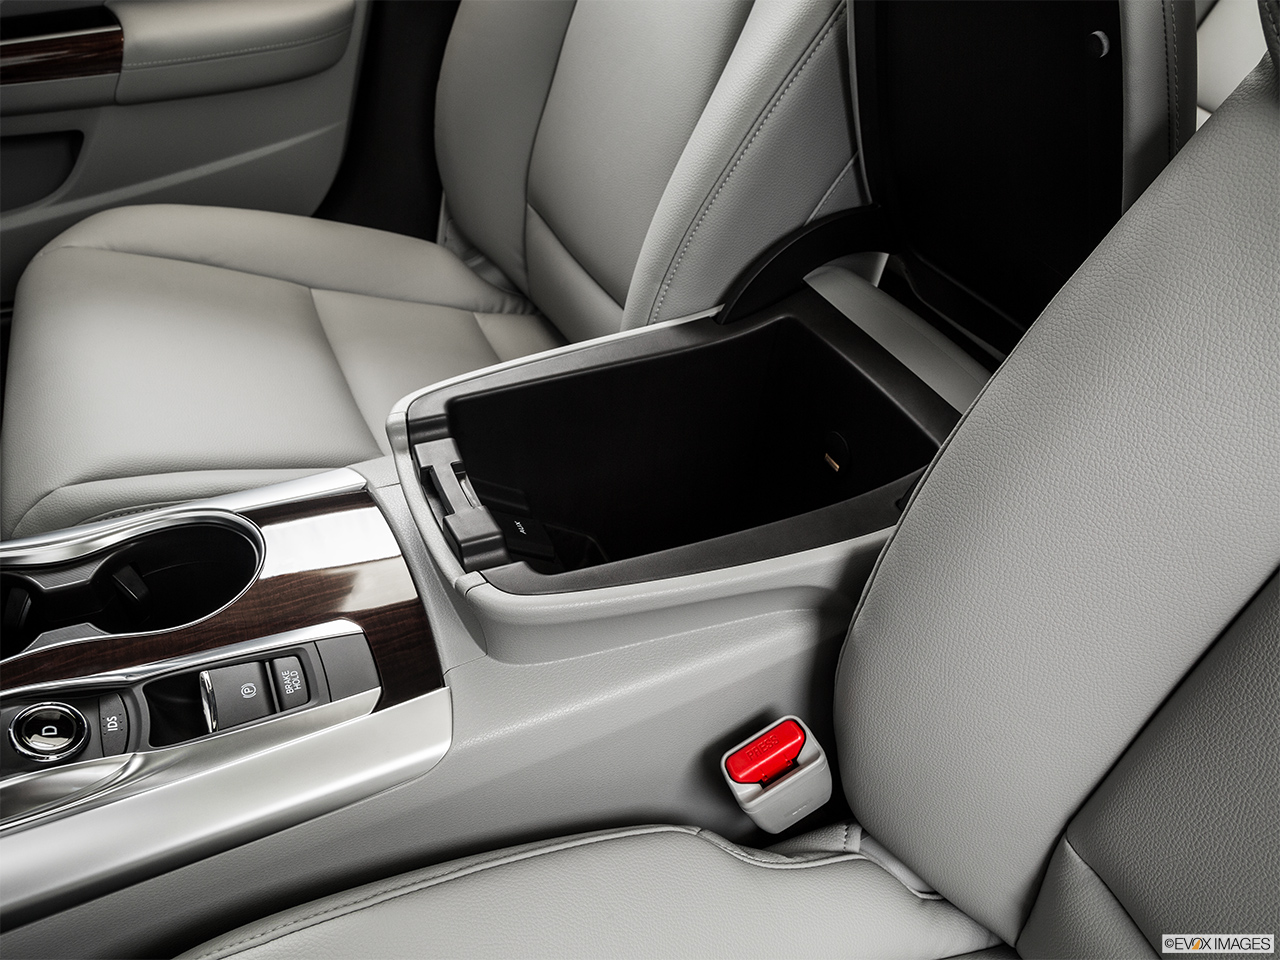 2016 Acura TLX 3.5 V-6 9-AT P-AWS Front center divider. 